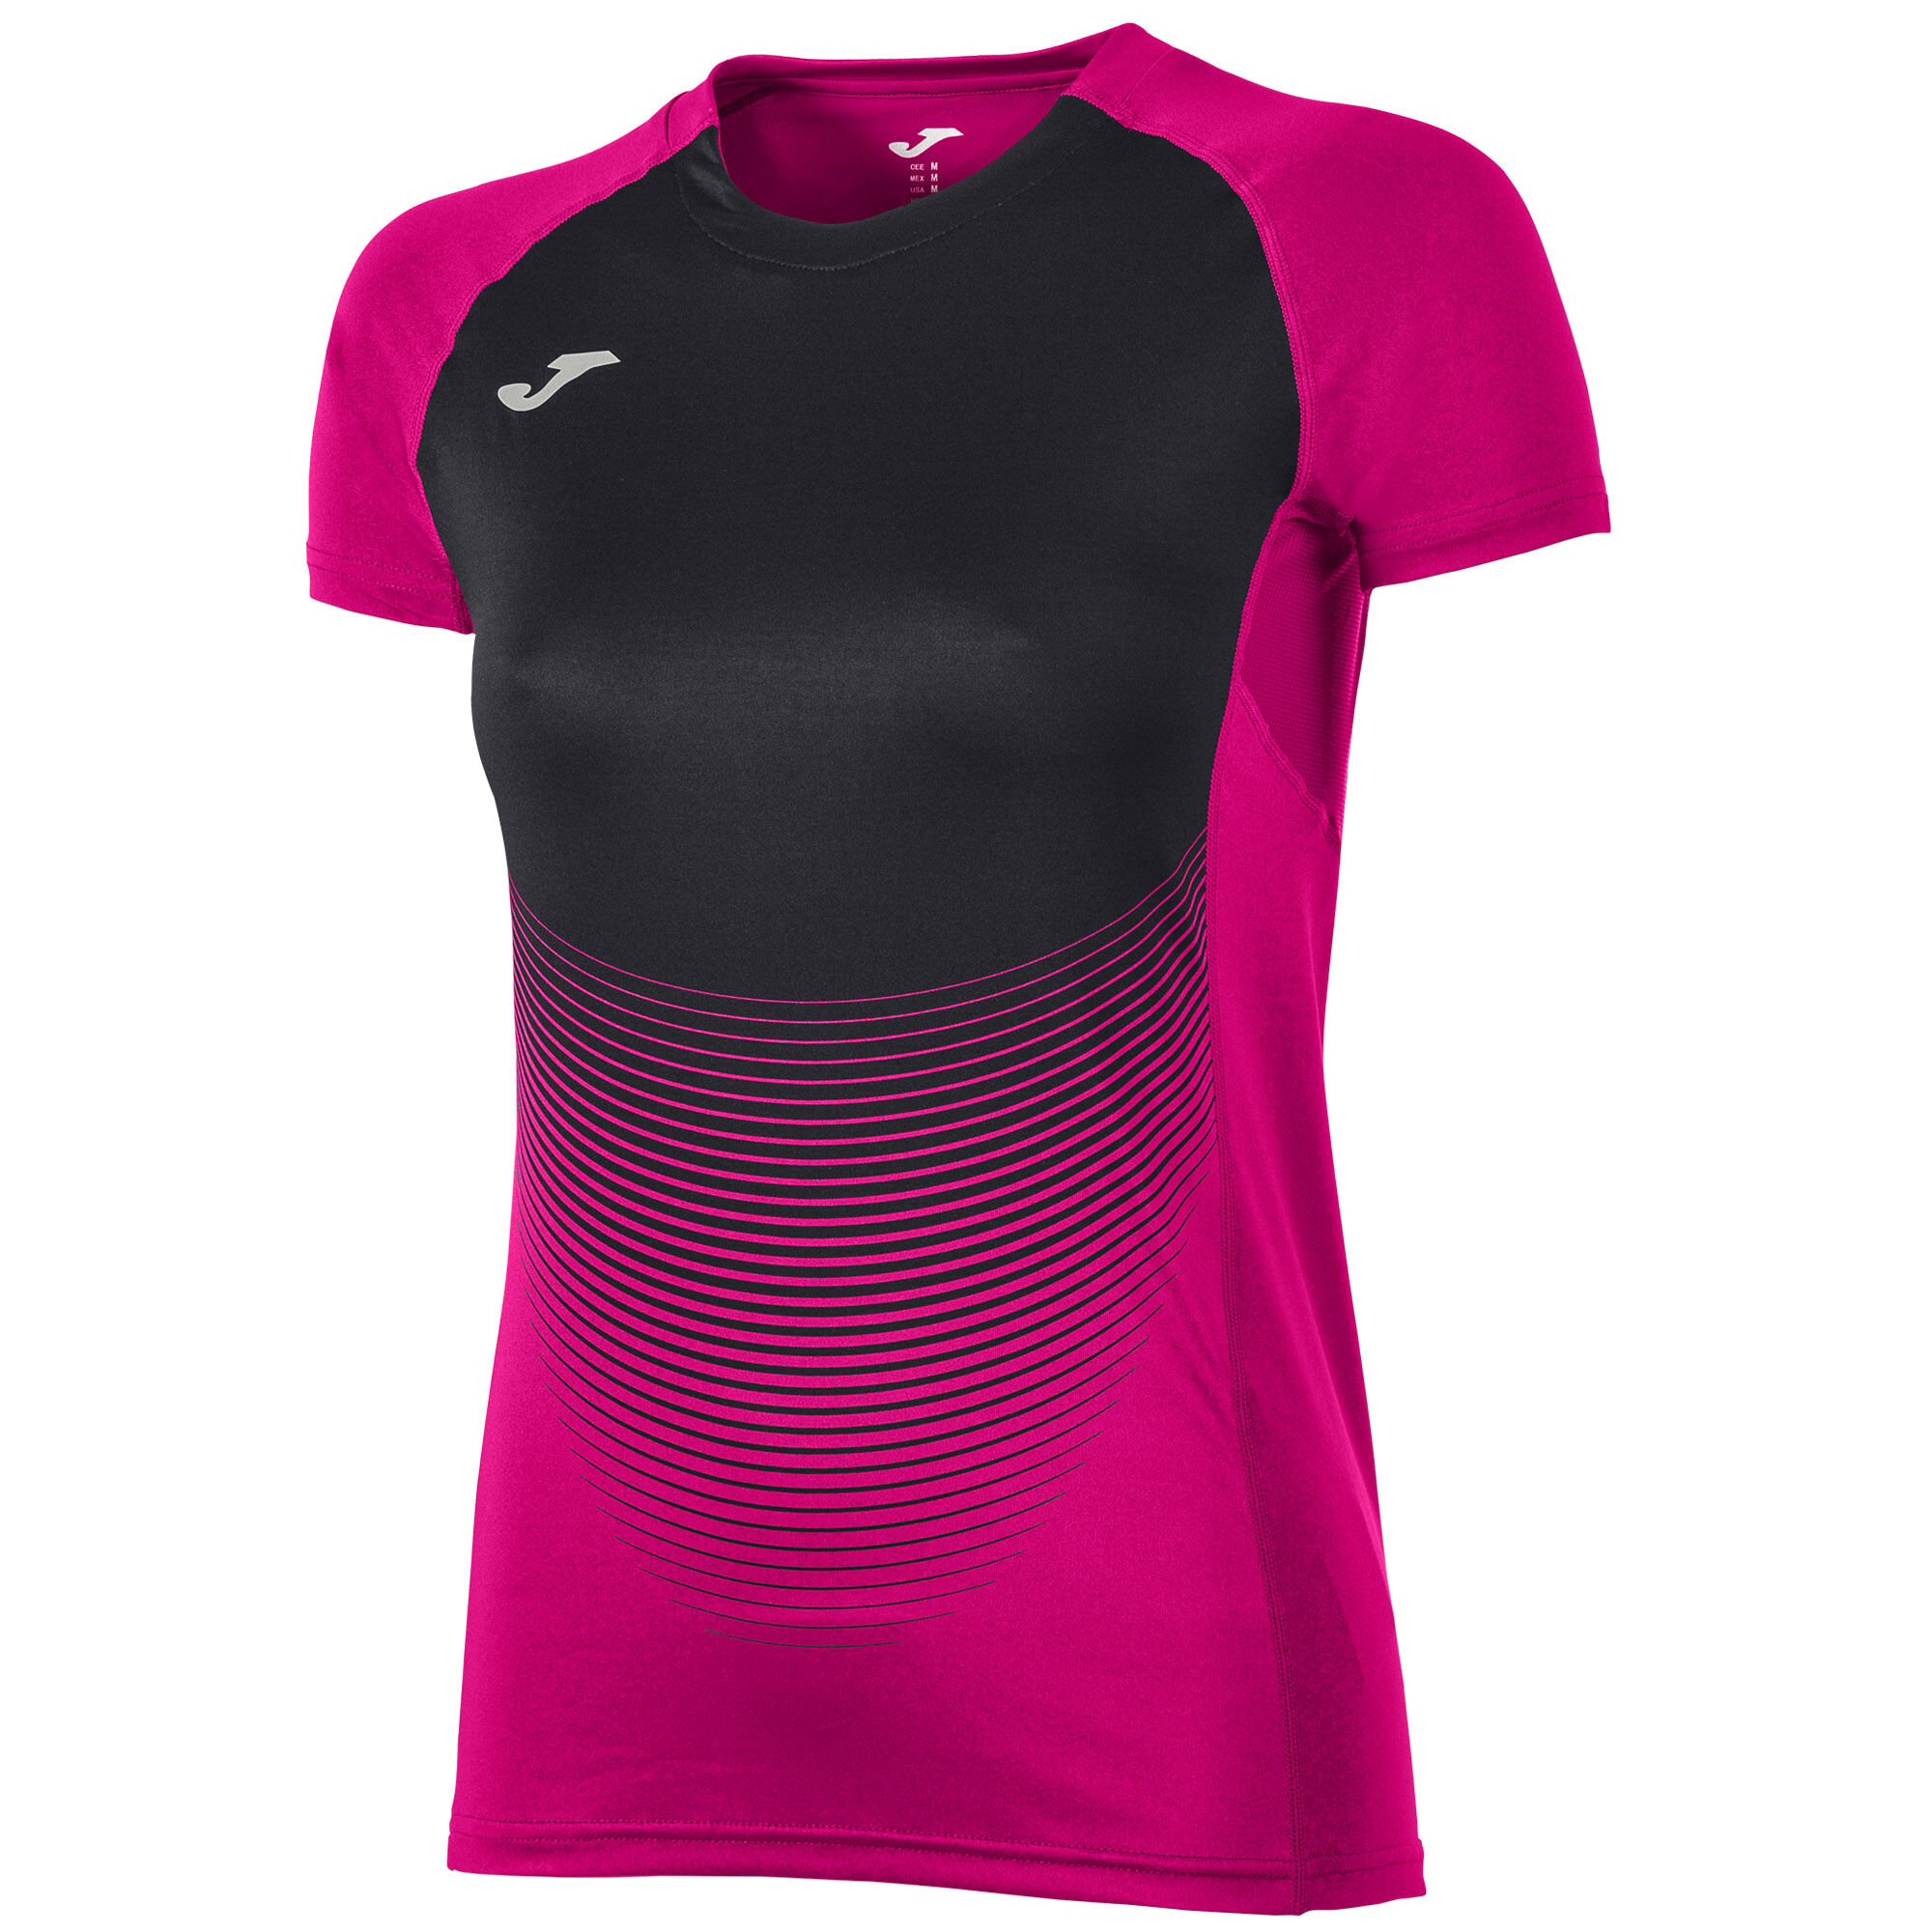 Joma Elite VII Camiseta de Running Mujer - Black/Pink